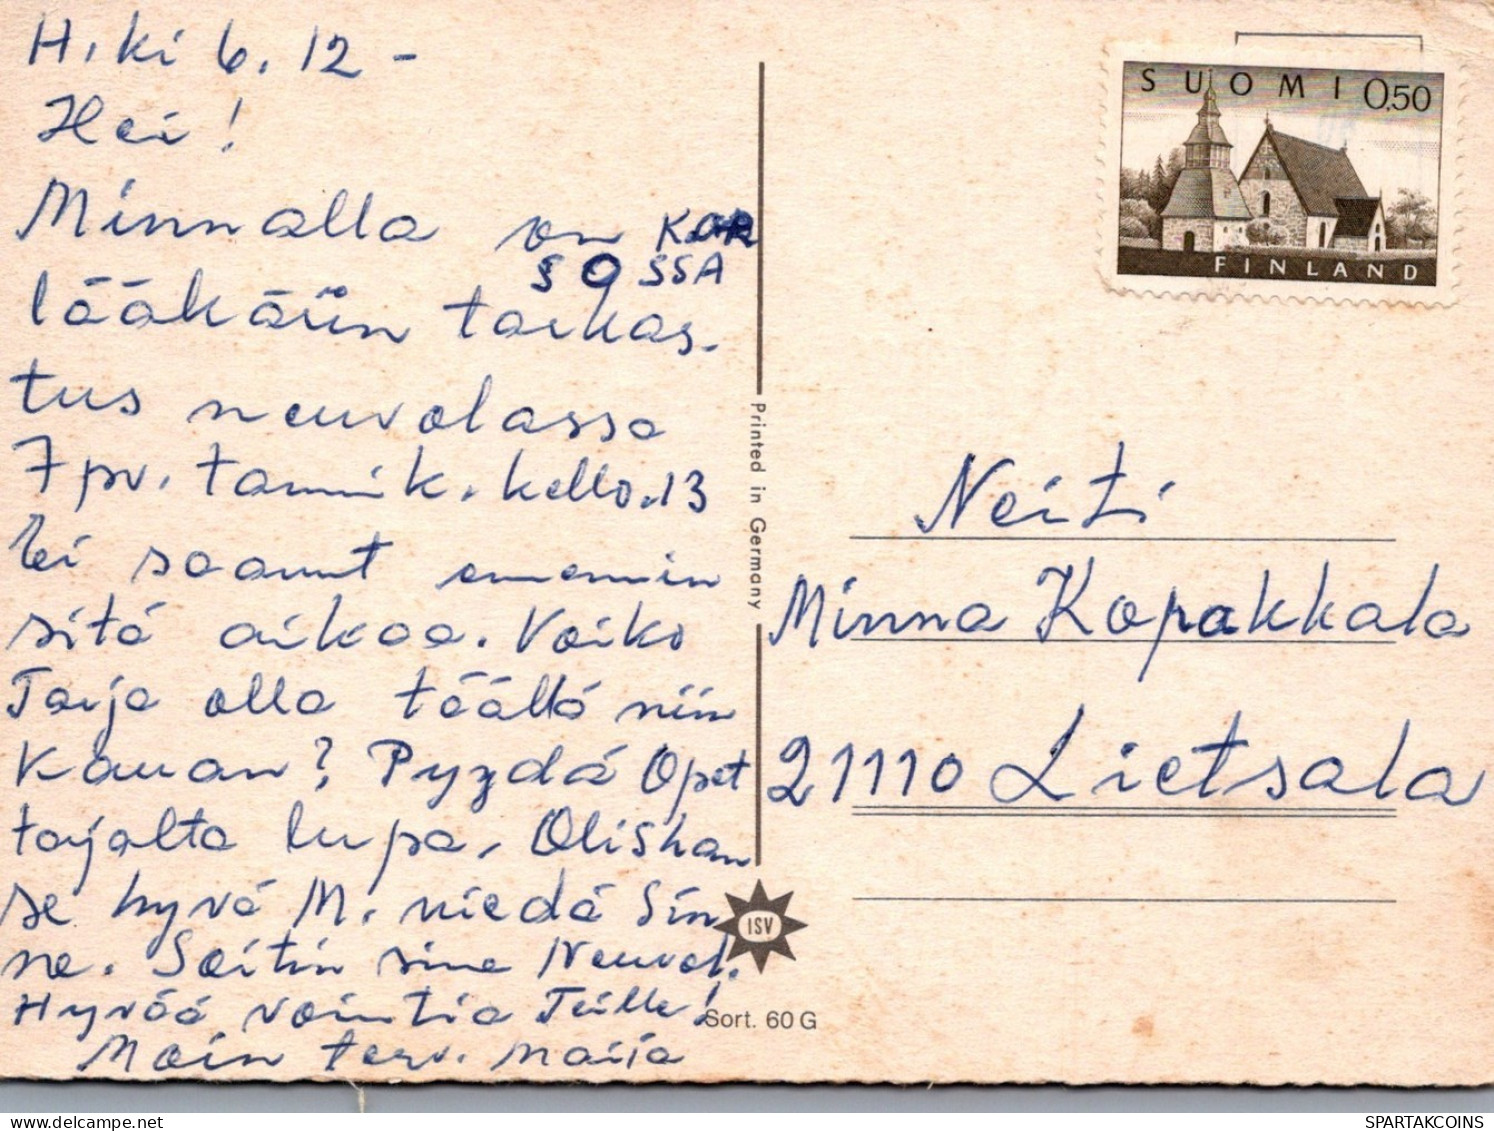 PERRO Animales Vintage Tarjeta Postal CPSM #PAN893.A - Hunde